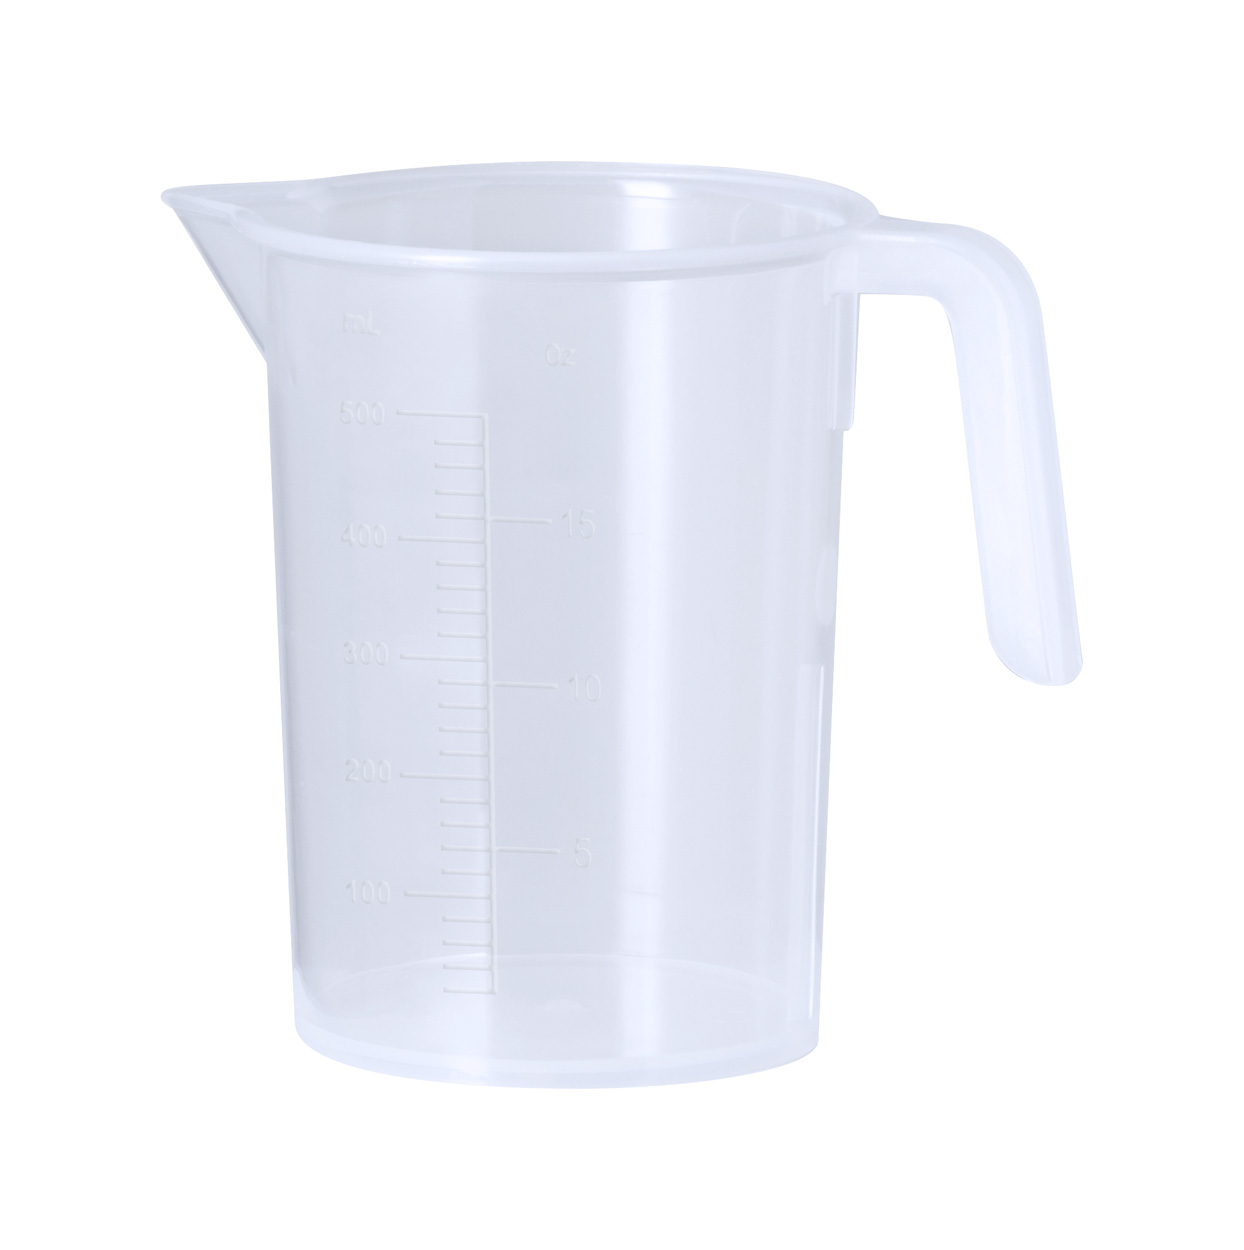 Promo  Ladex measuring jug